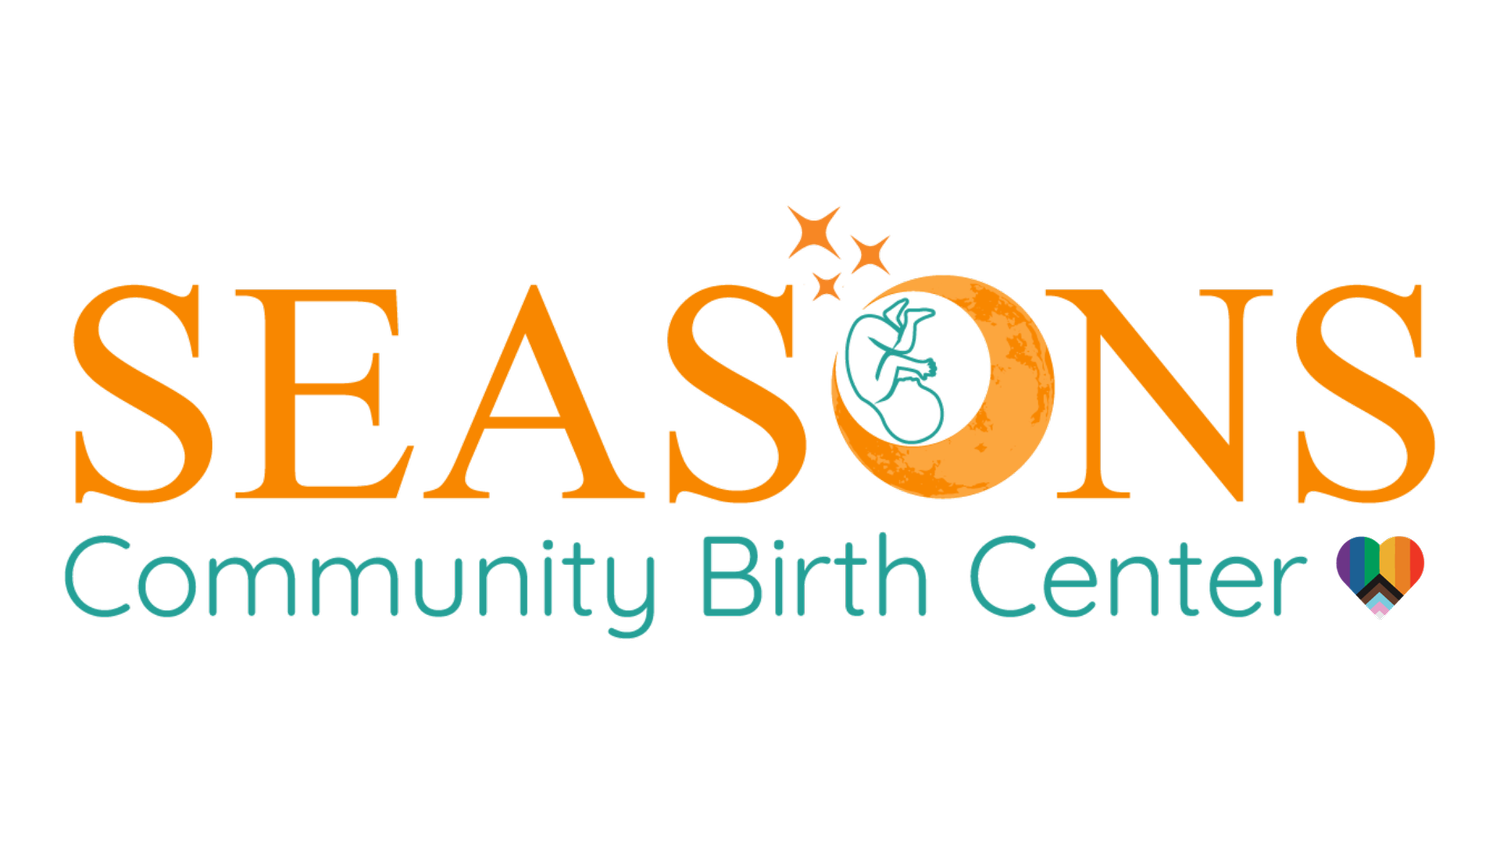 Seasons Community Birth Center